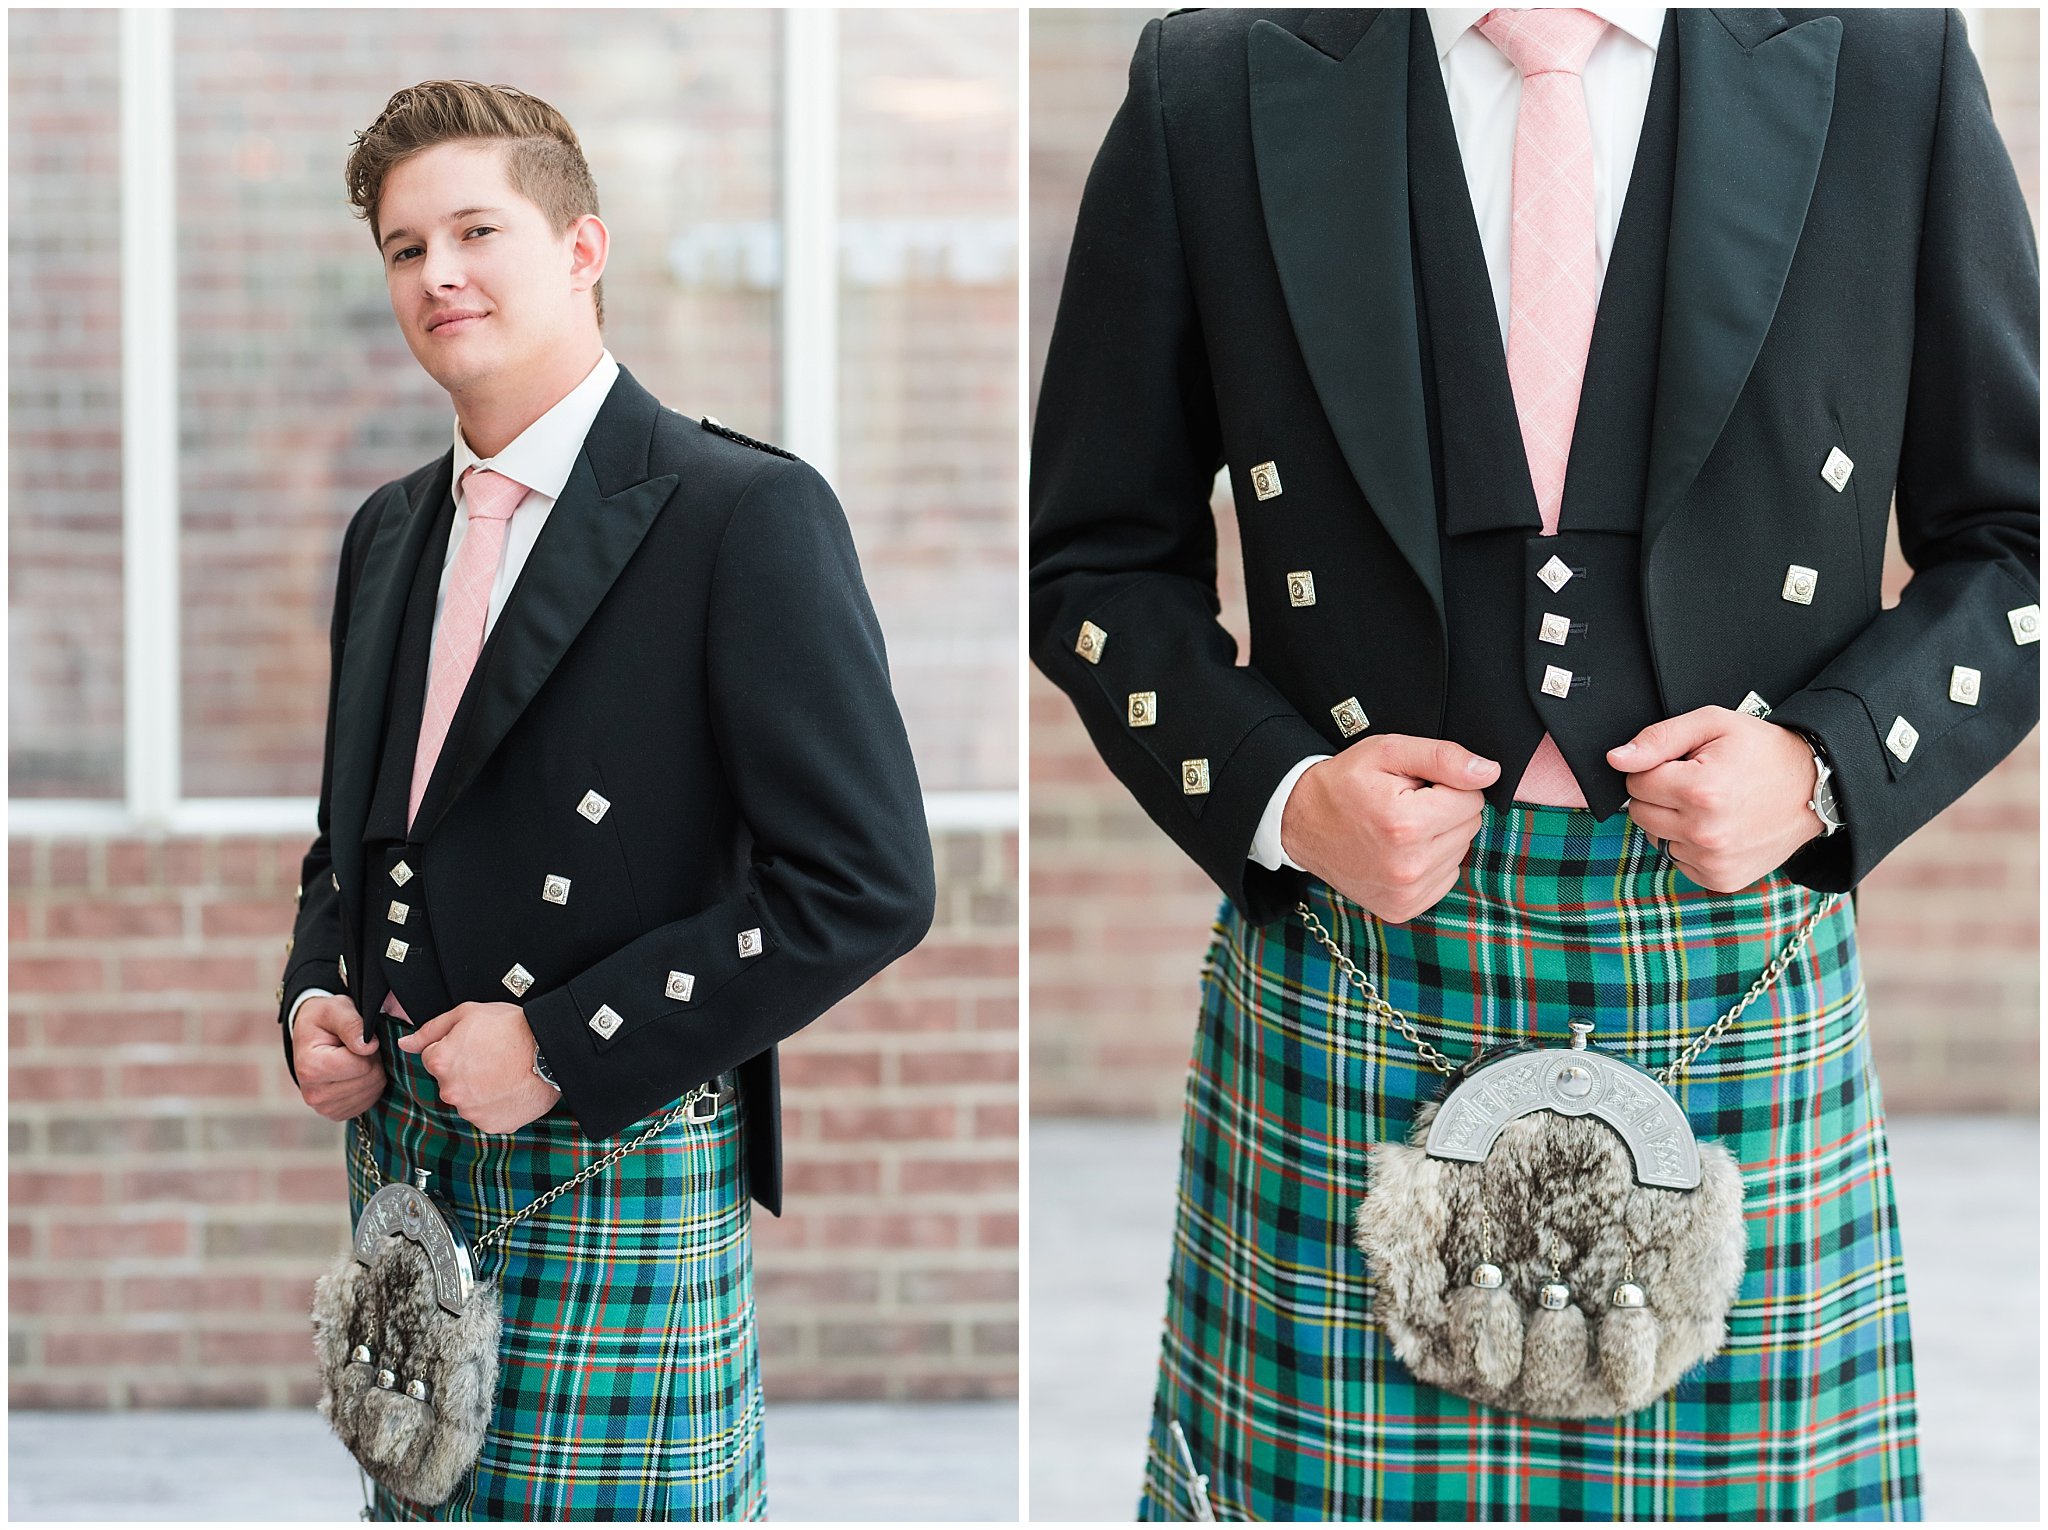 Groom wearing highland attire with tartan and kilt | Talia Event Center Summer Wedding | Jessie and Dallin Photography